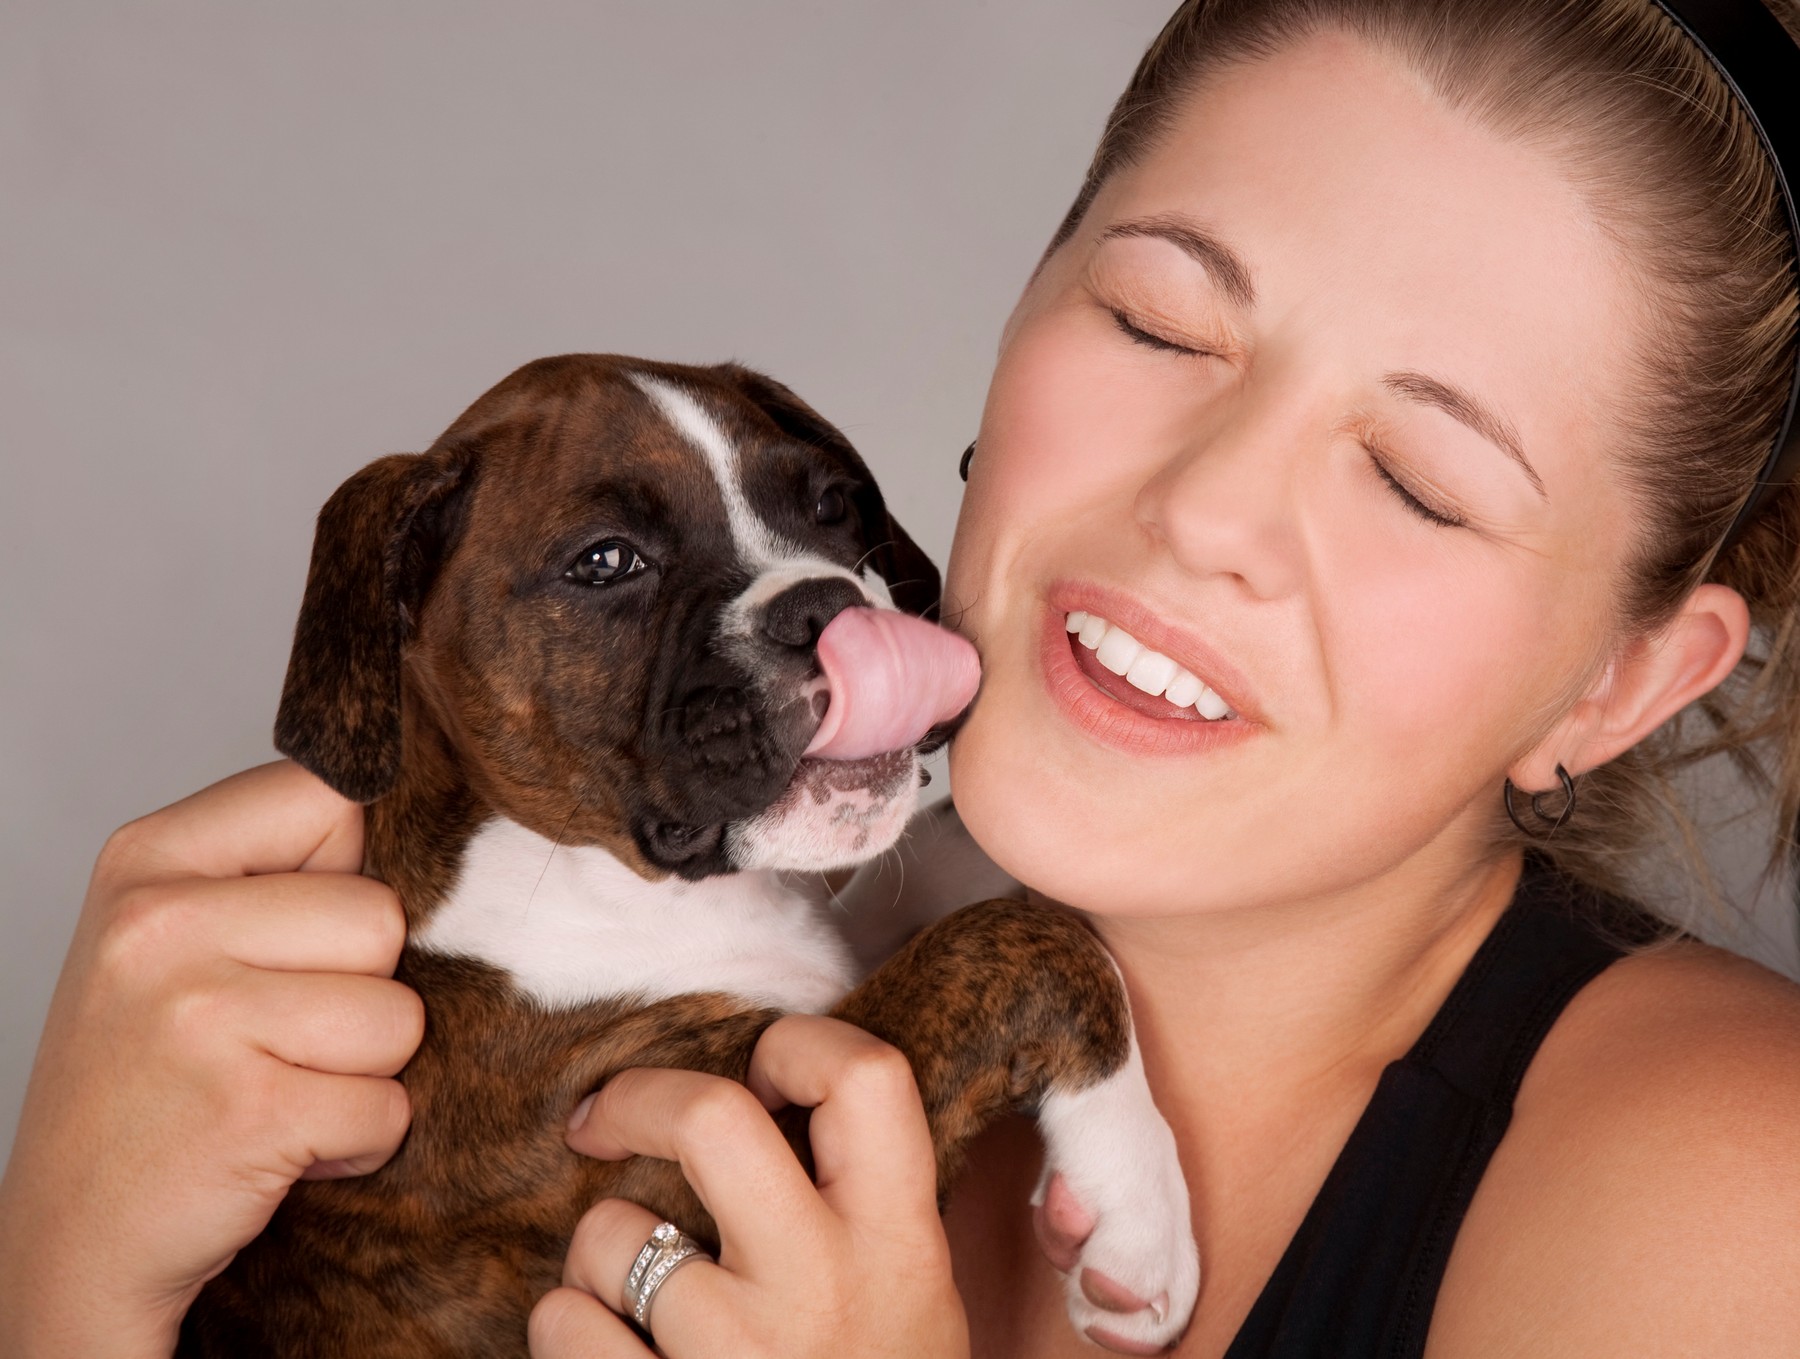 Dog lick woman